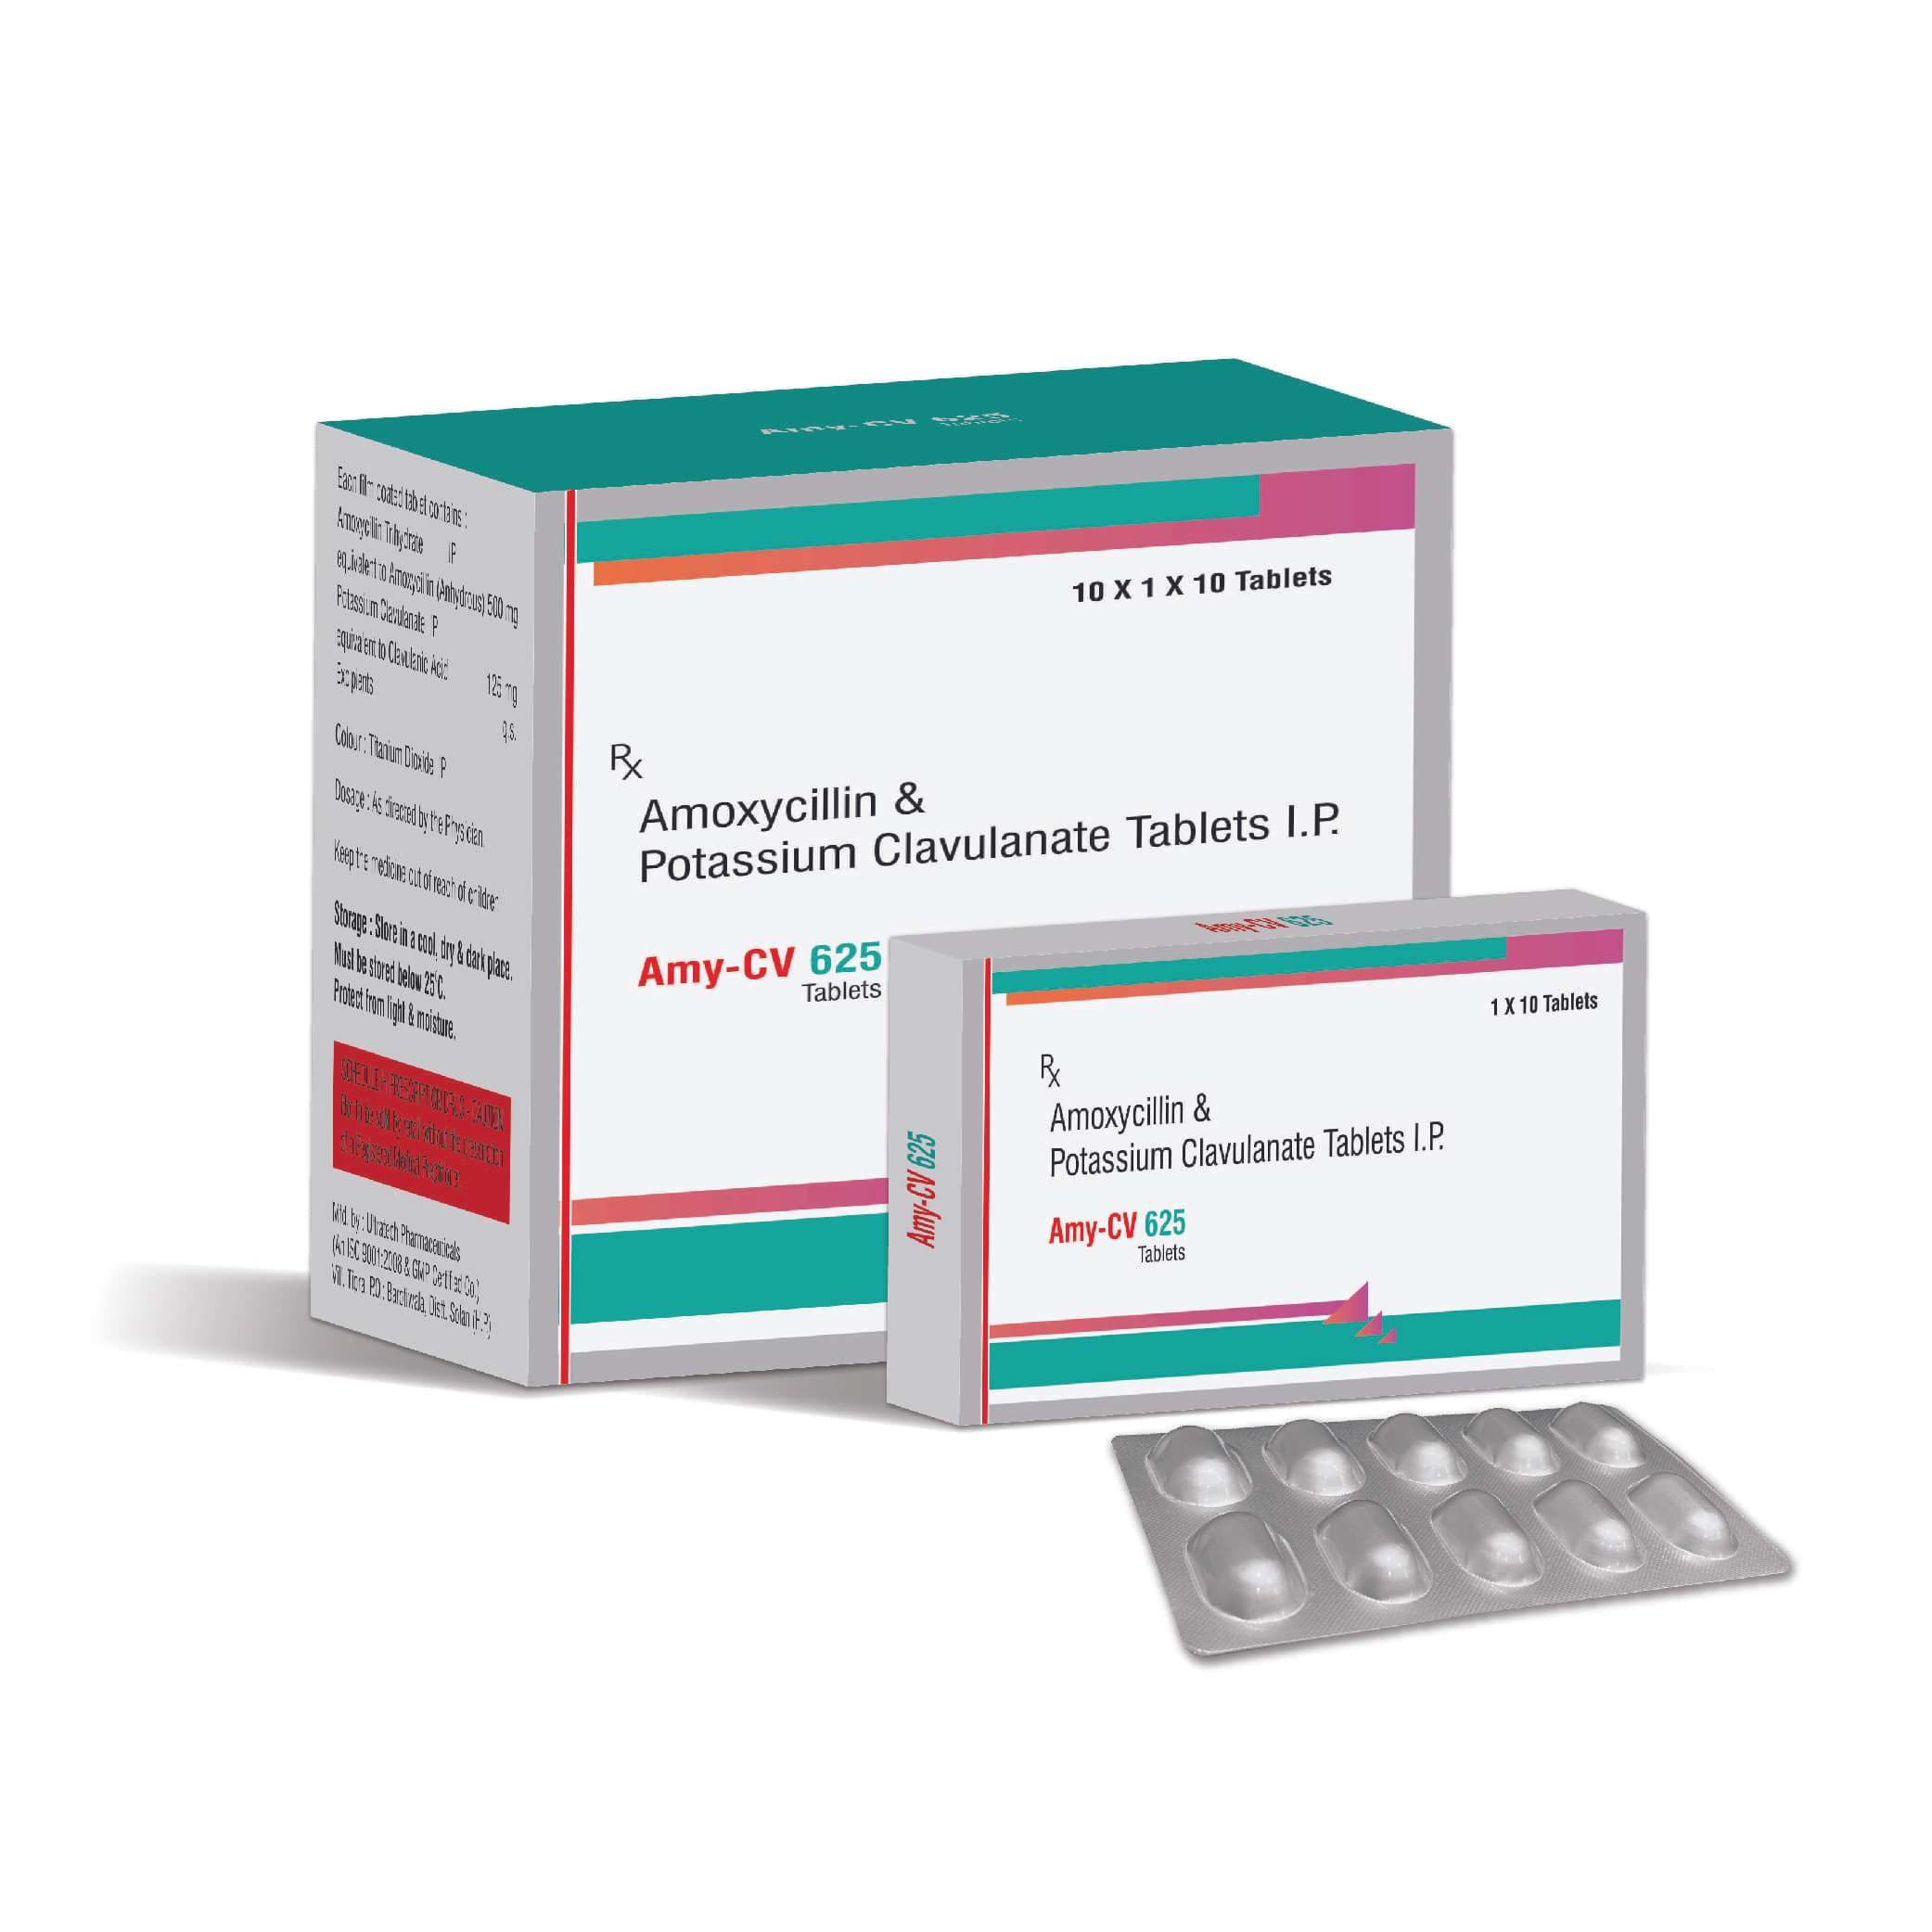 amoxycillin 500 + clavulanate 125 mg